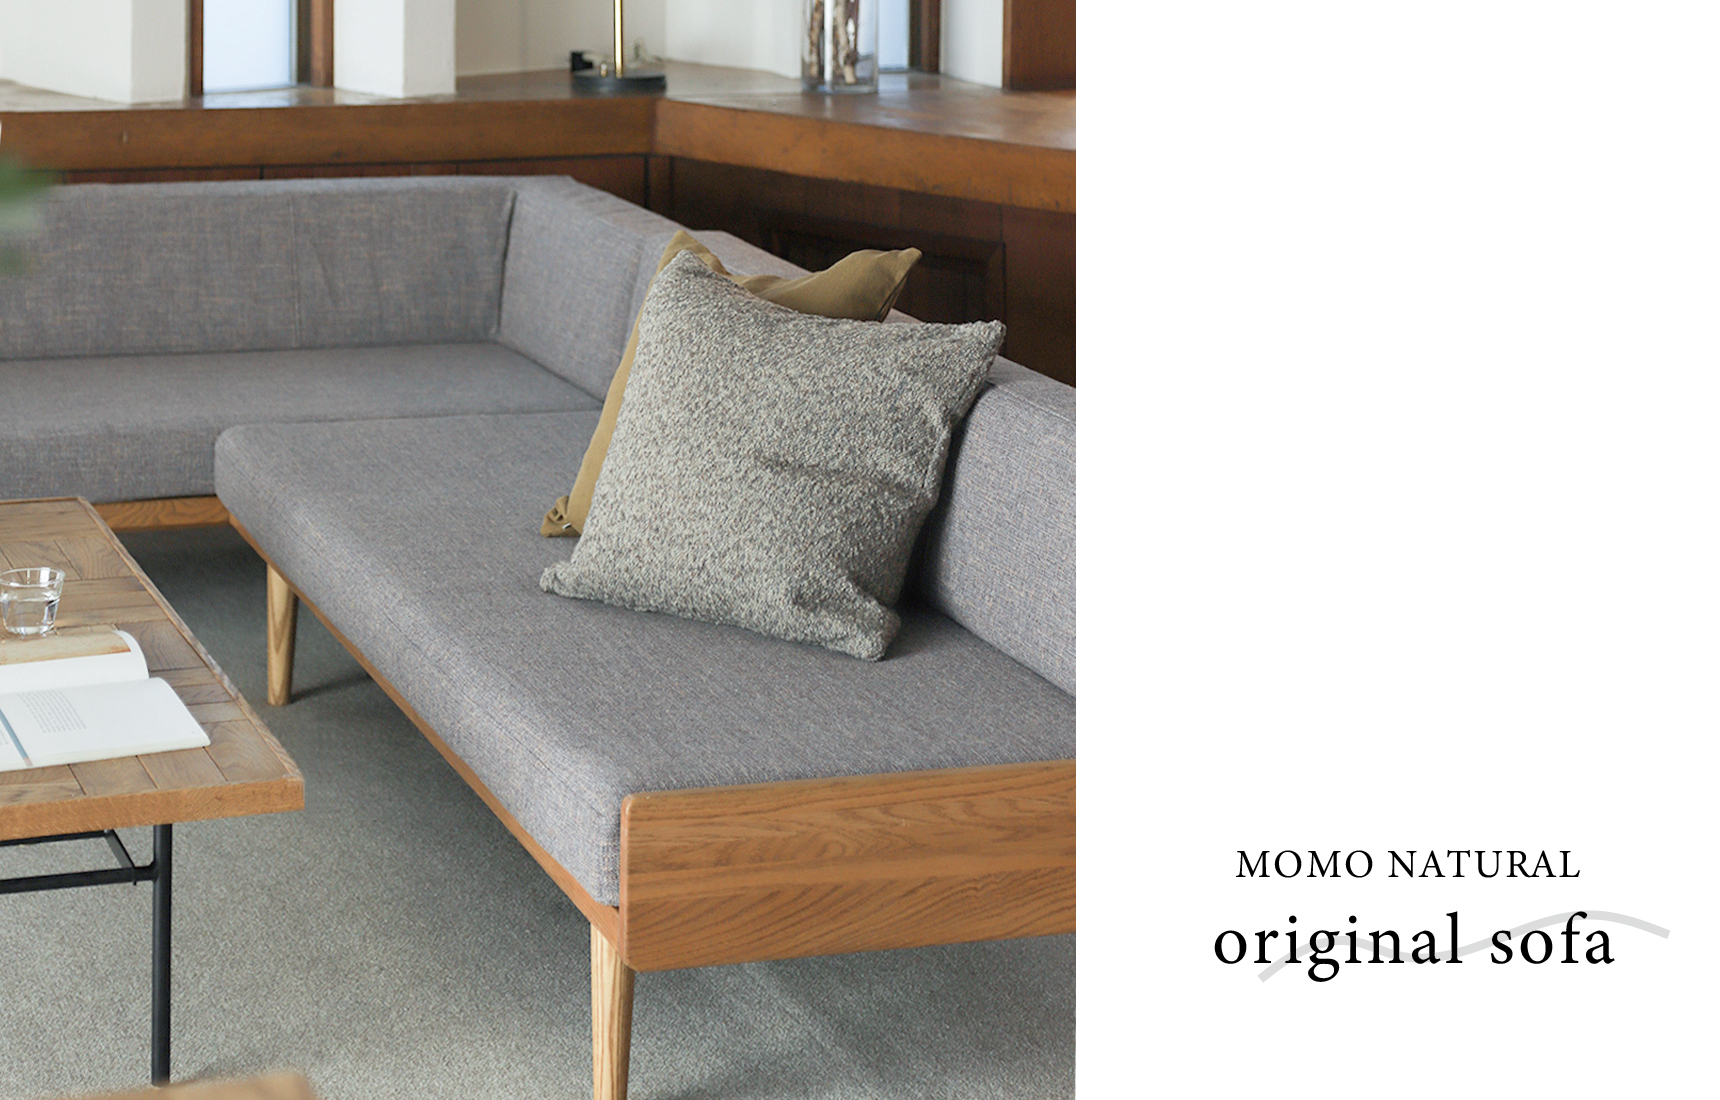 MOMO NATURAL original sofa - MOMO NATURAL